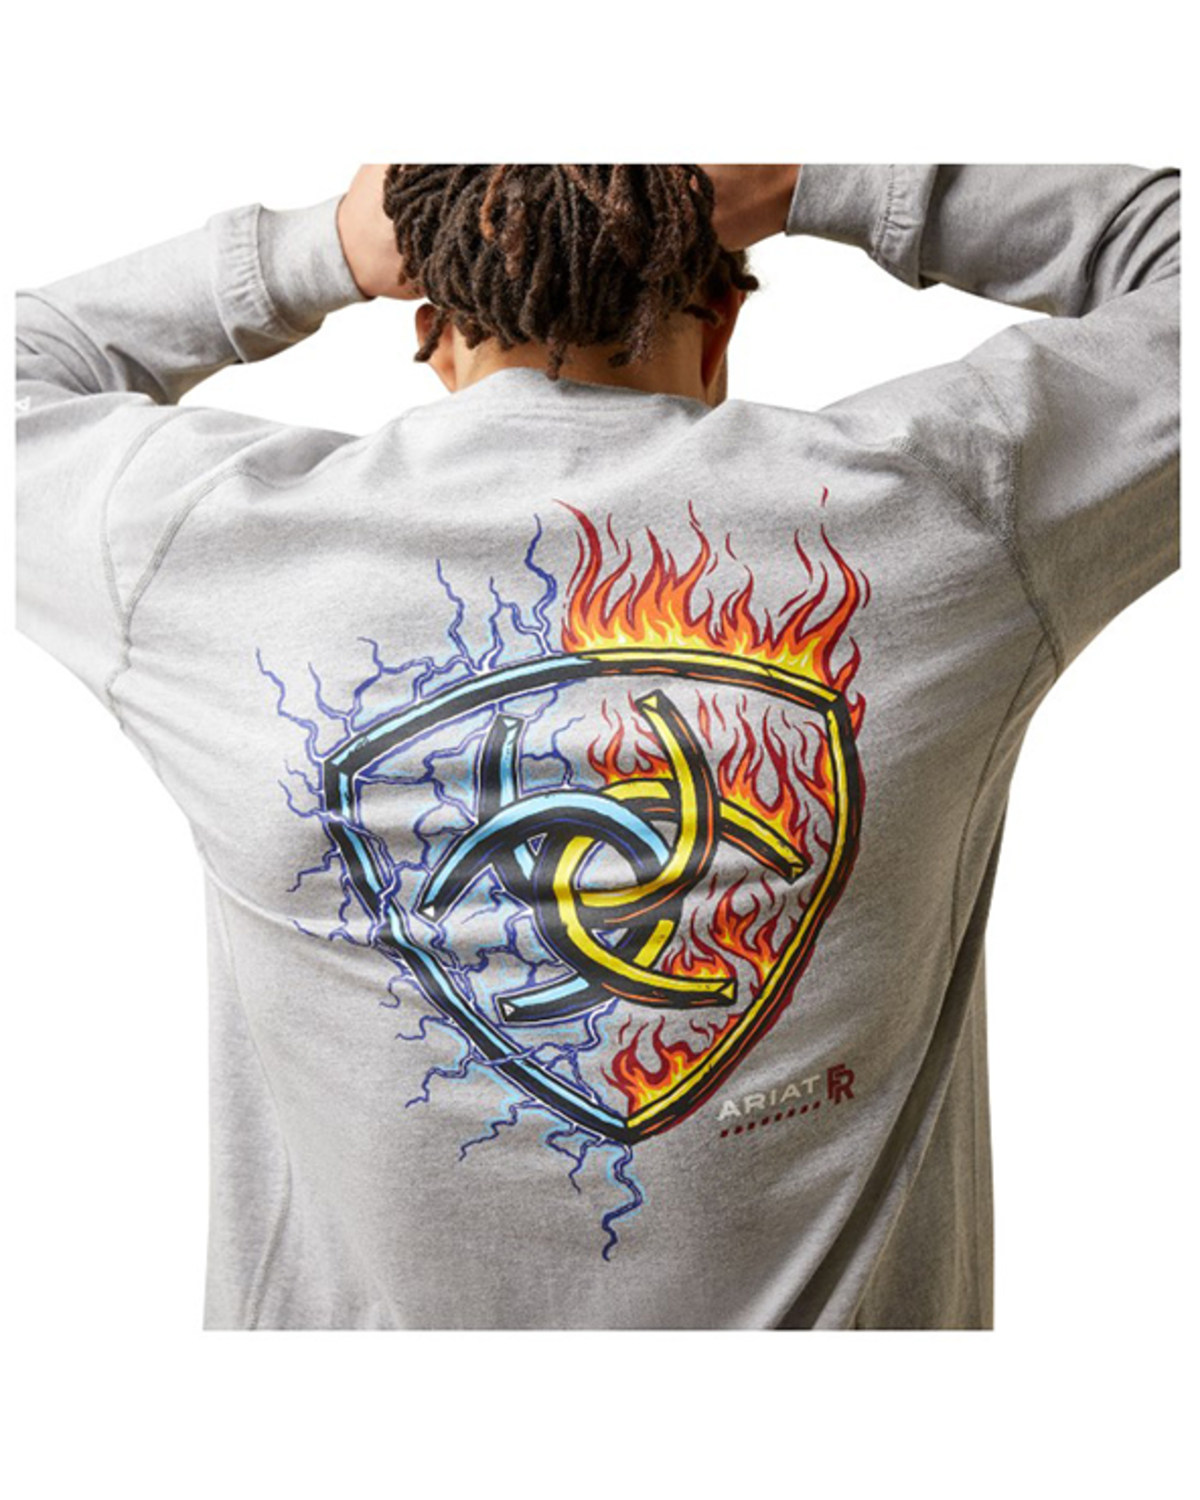 Ariat Men's FR Air Shock Long Sleeve Graphic Work T-Shirt